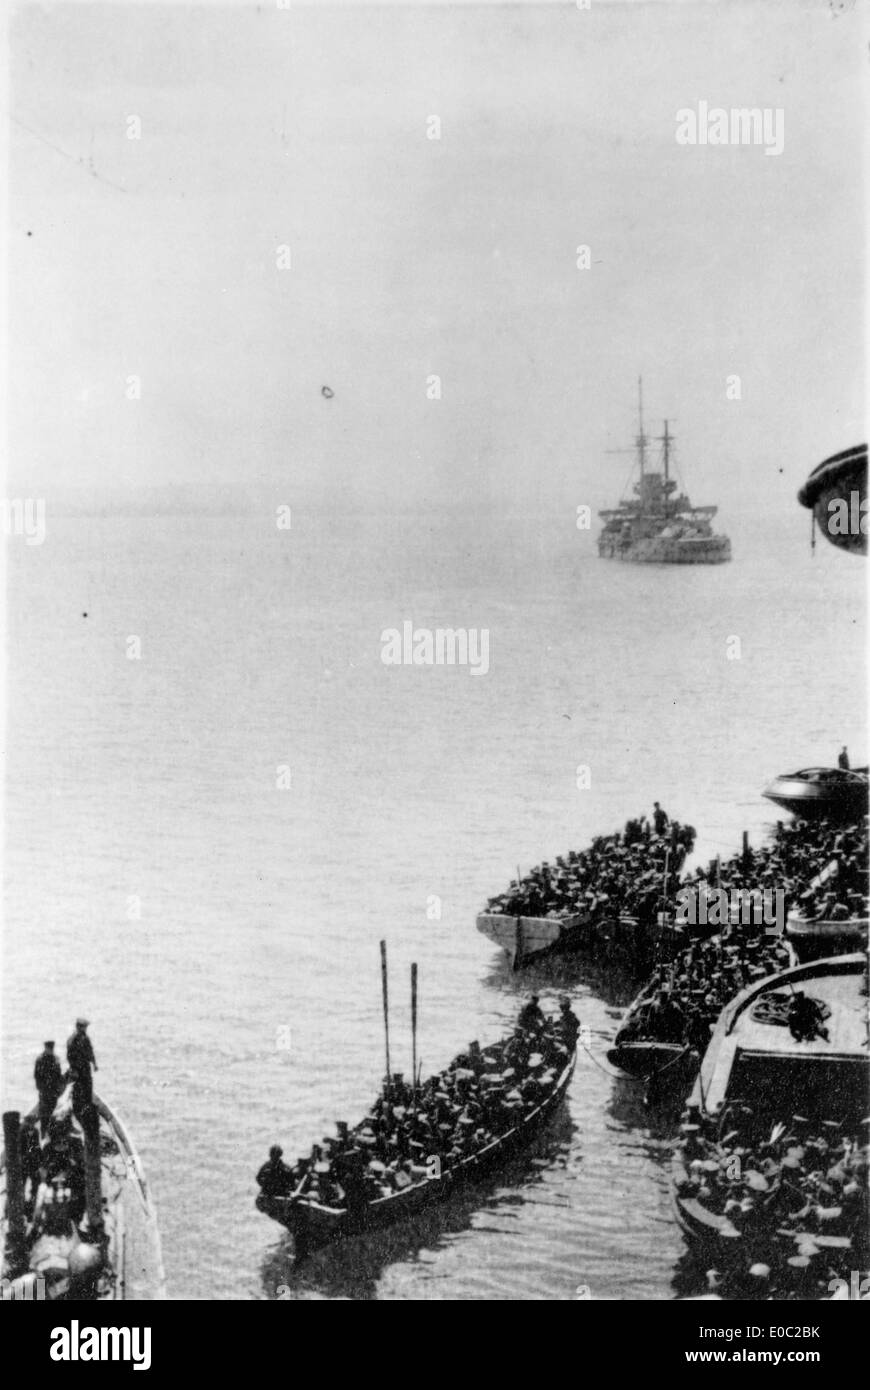 Auckland Battalion landing at Gallipoli, Turkey, during World War I, 25 April 1915 Stock Photo